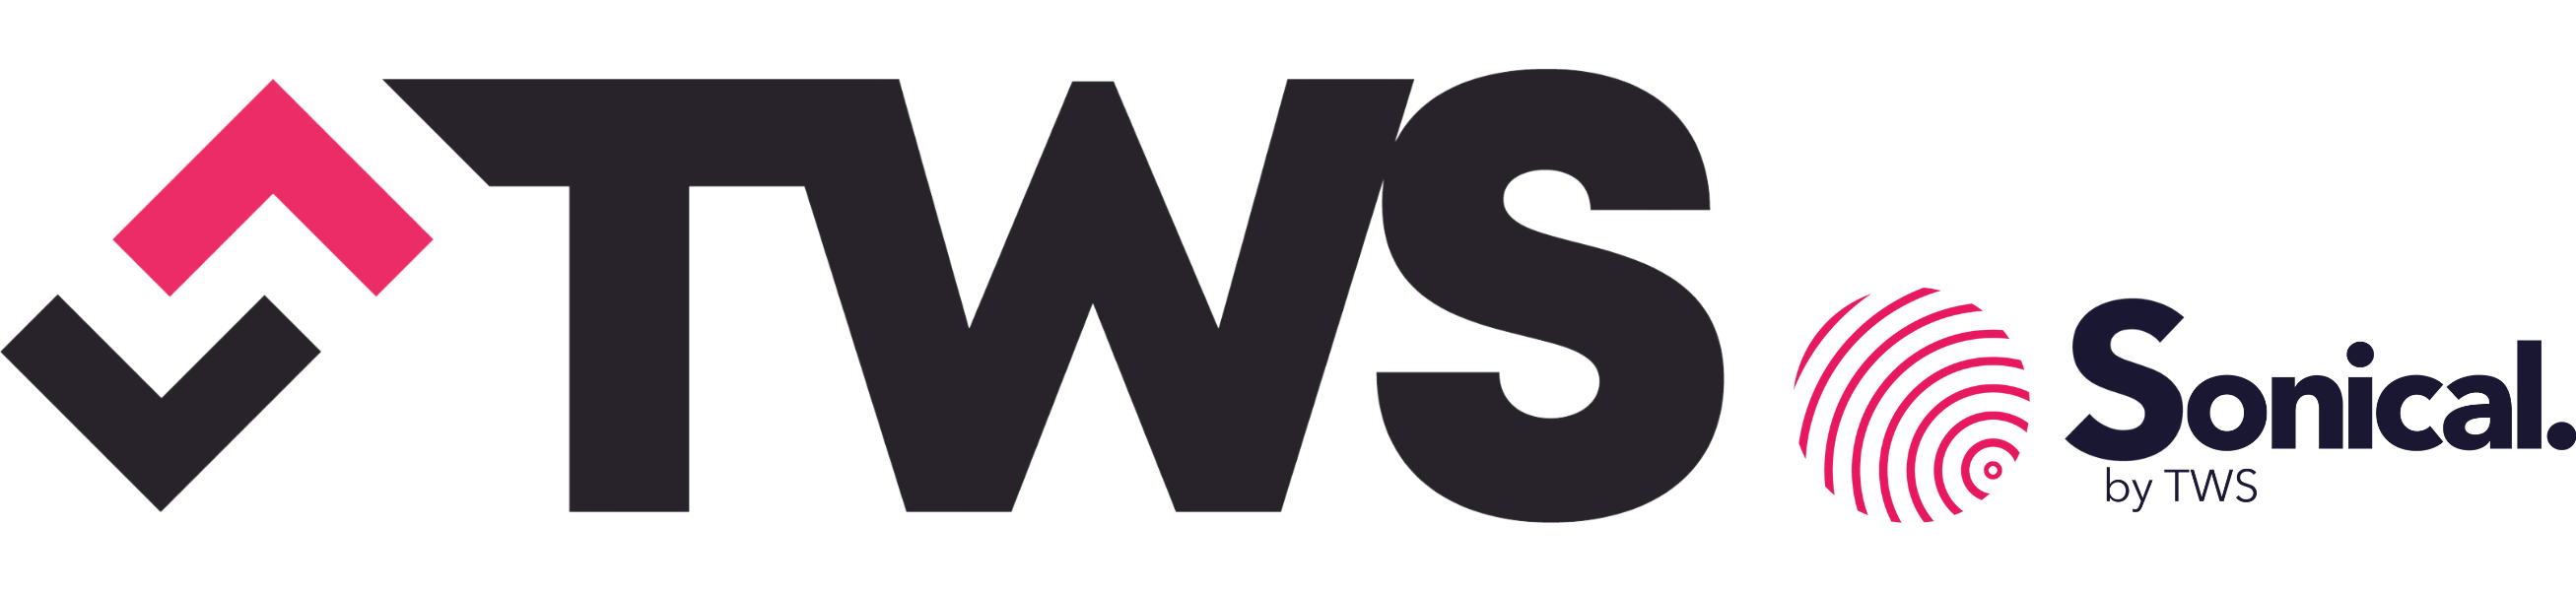 TWS - logo website (1)